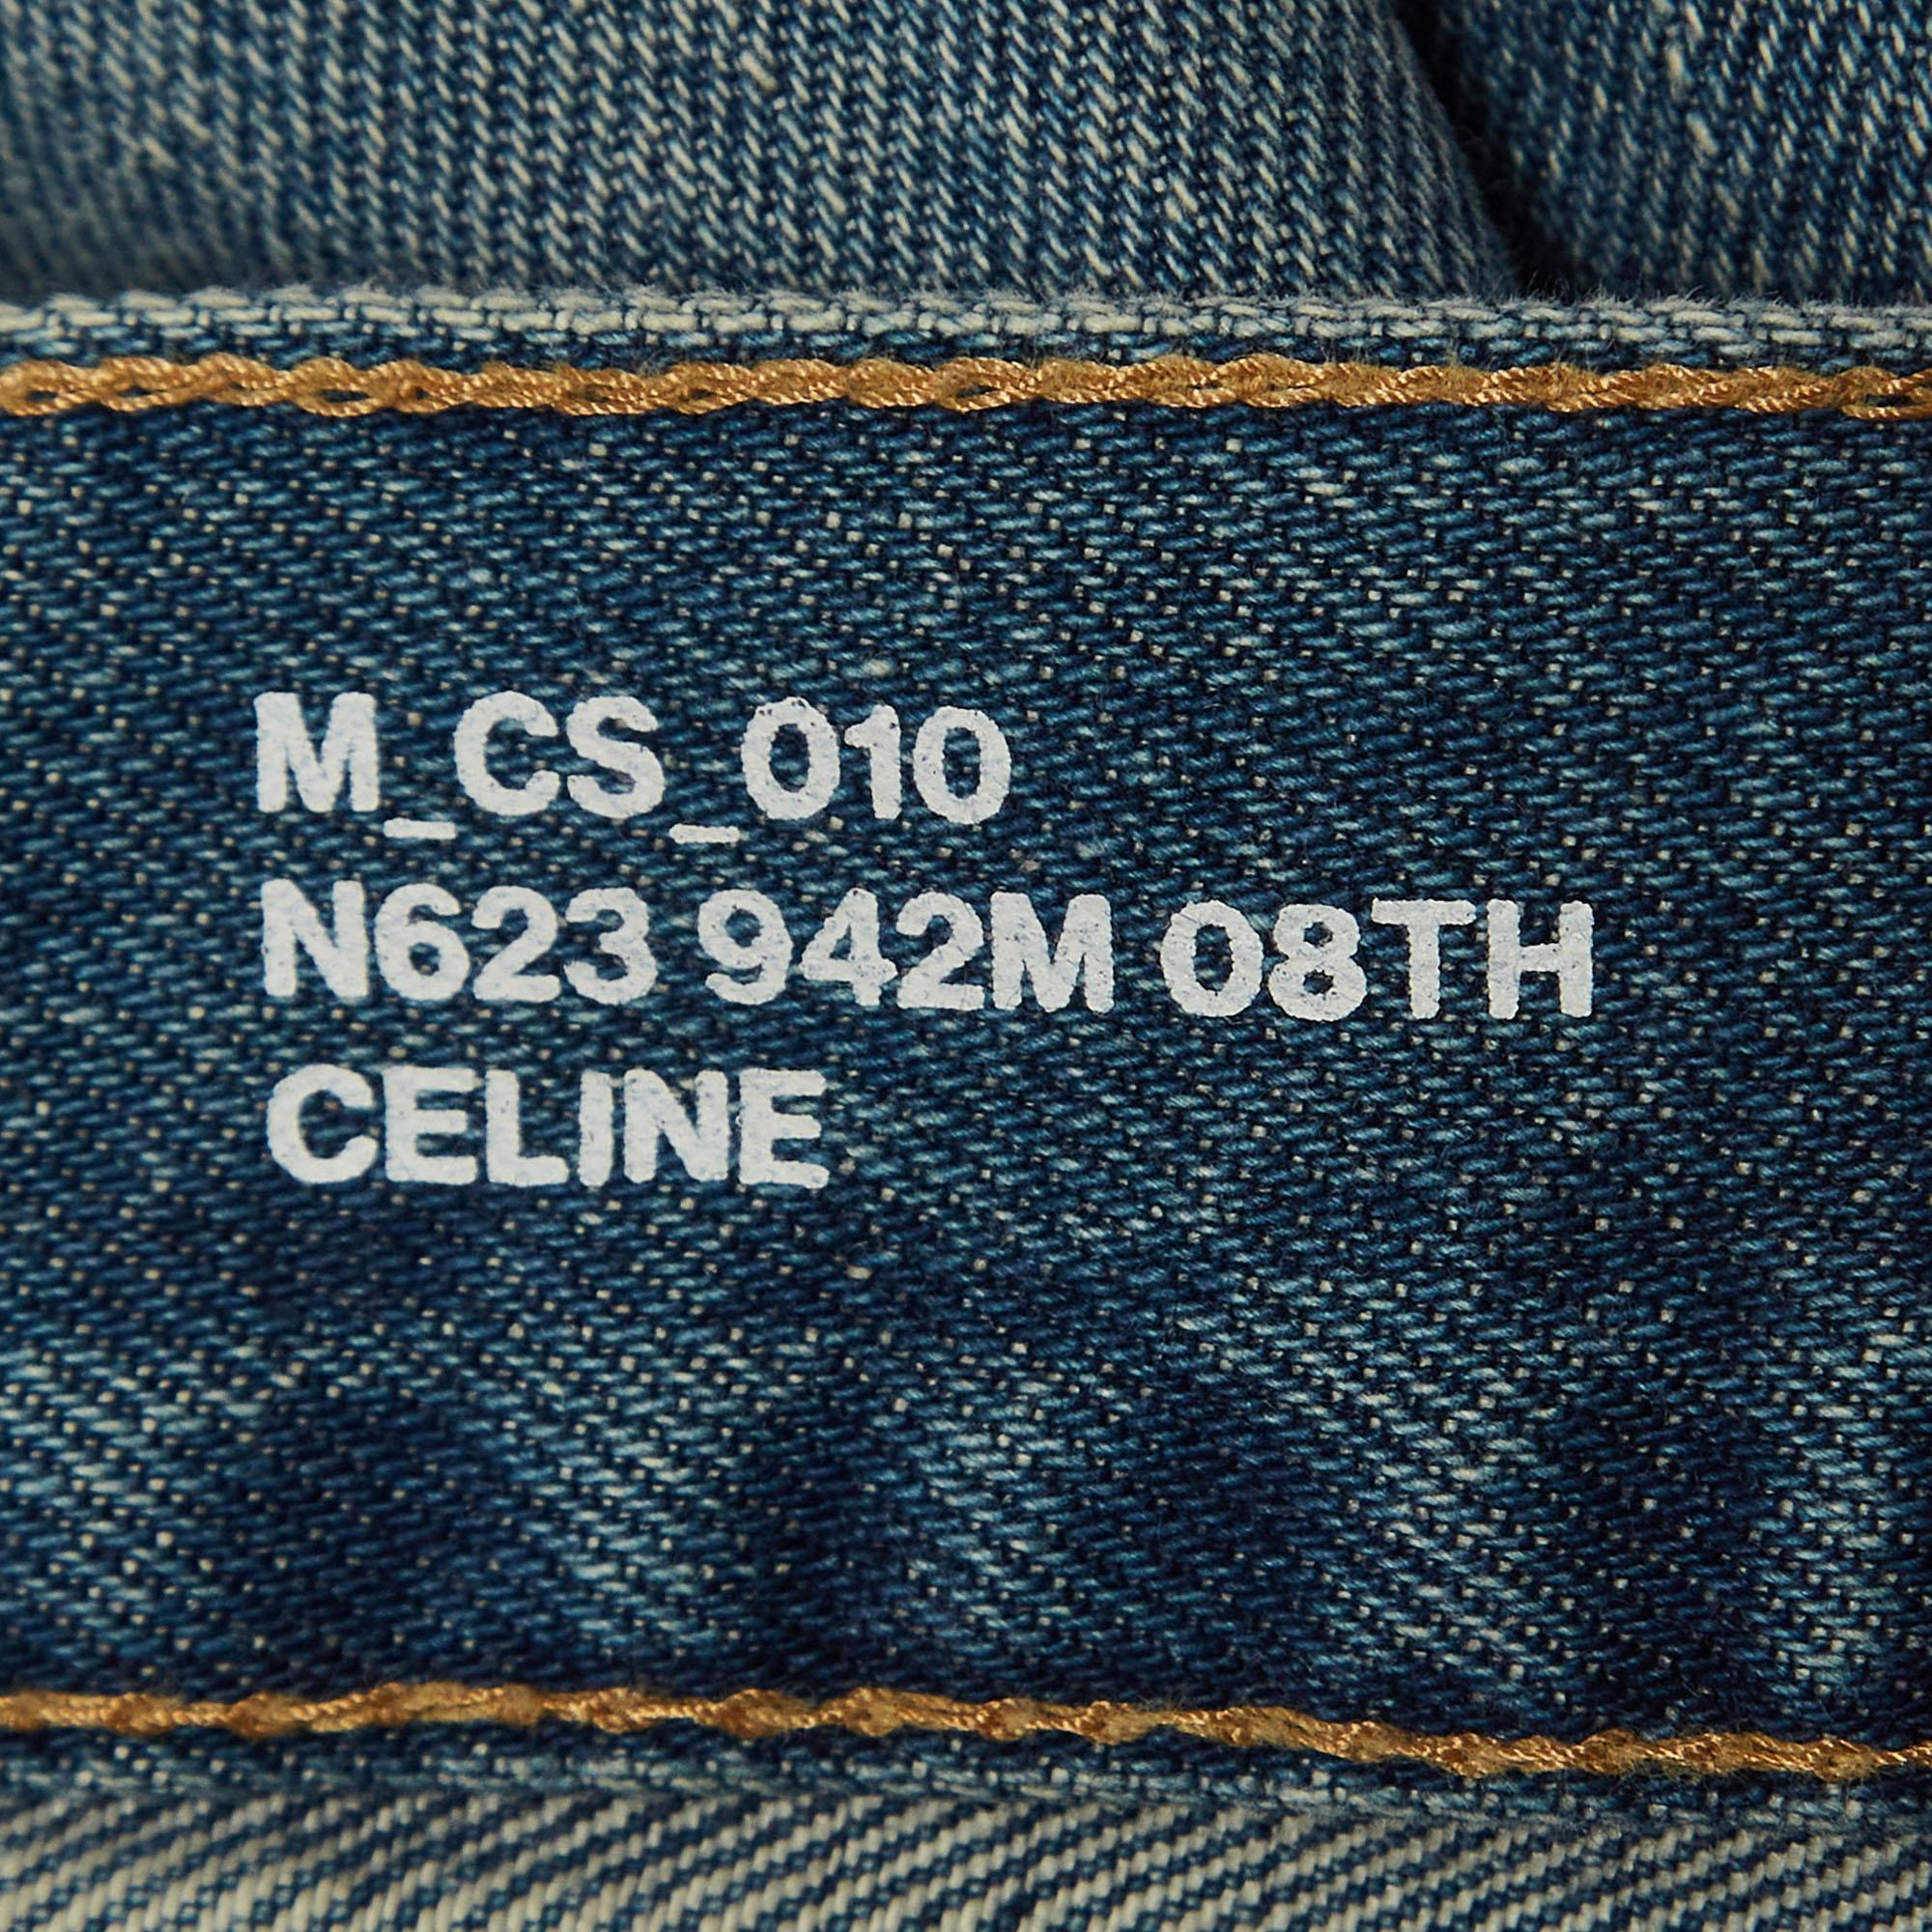 celine distressed jeans